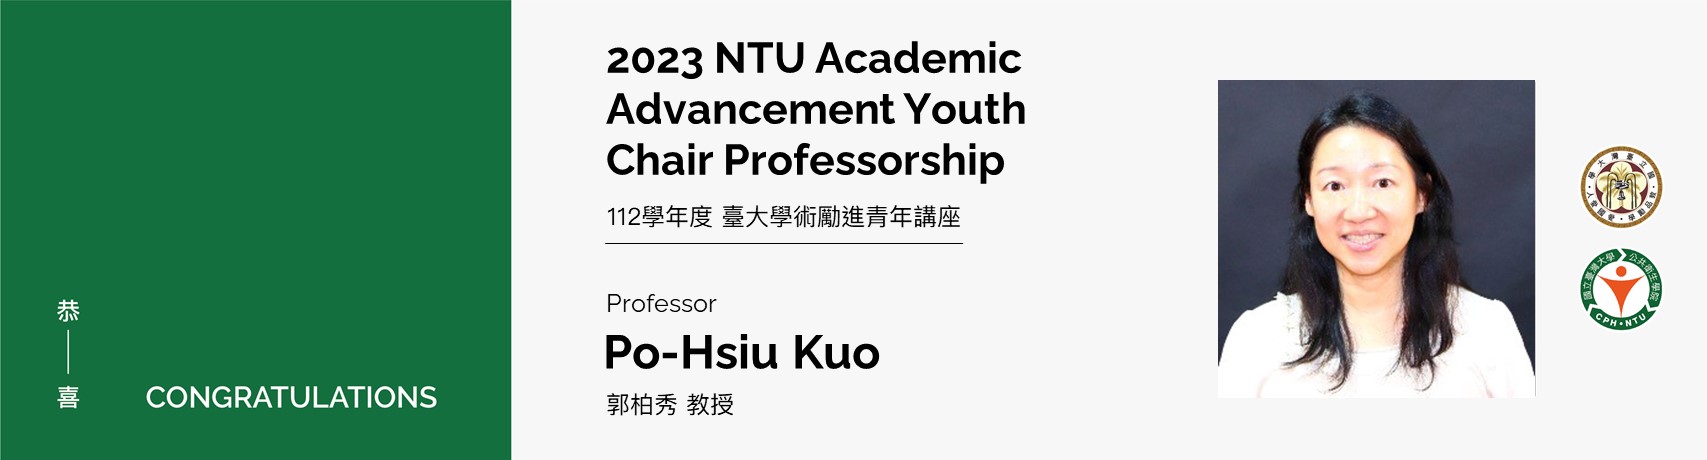 【Congratulations!】Prof. Po-Hsiu Kuo awarded 2023 NTU Academic Advancement Youth Chair Professorship